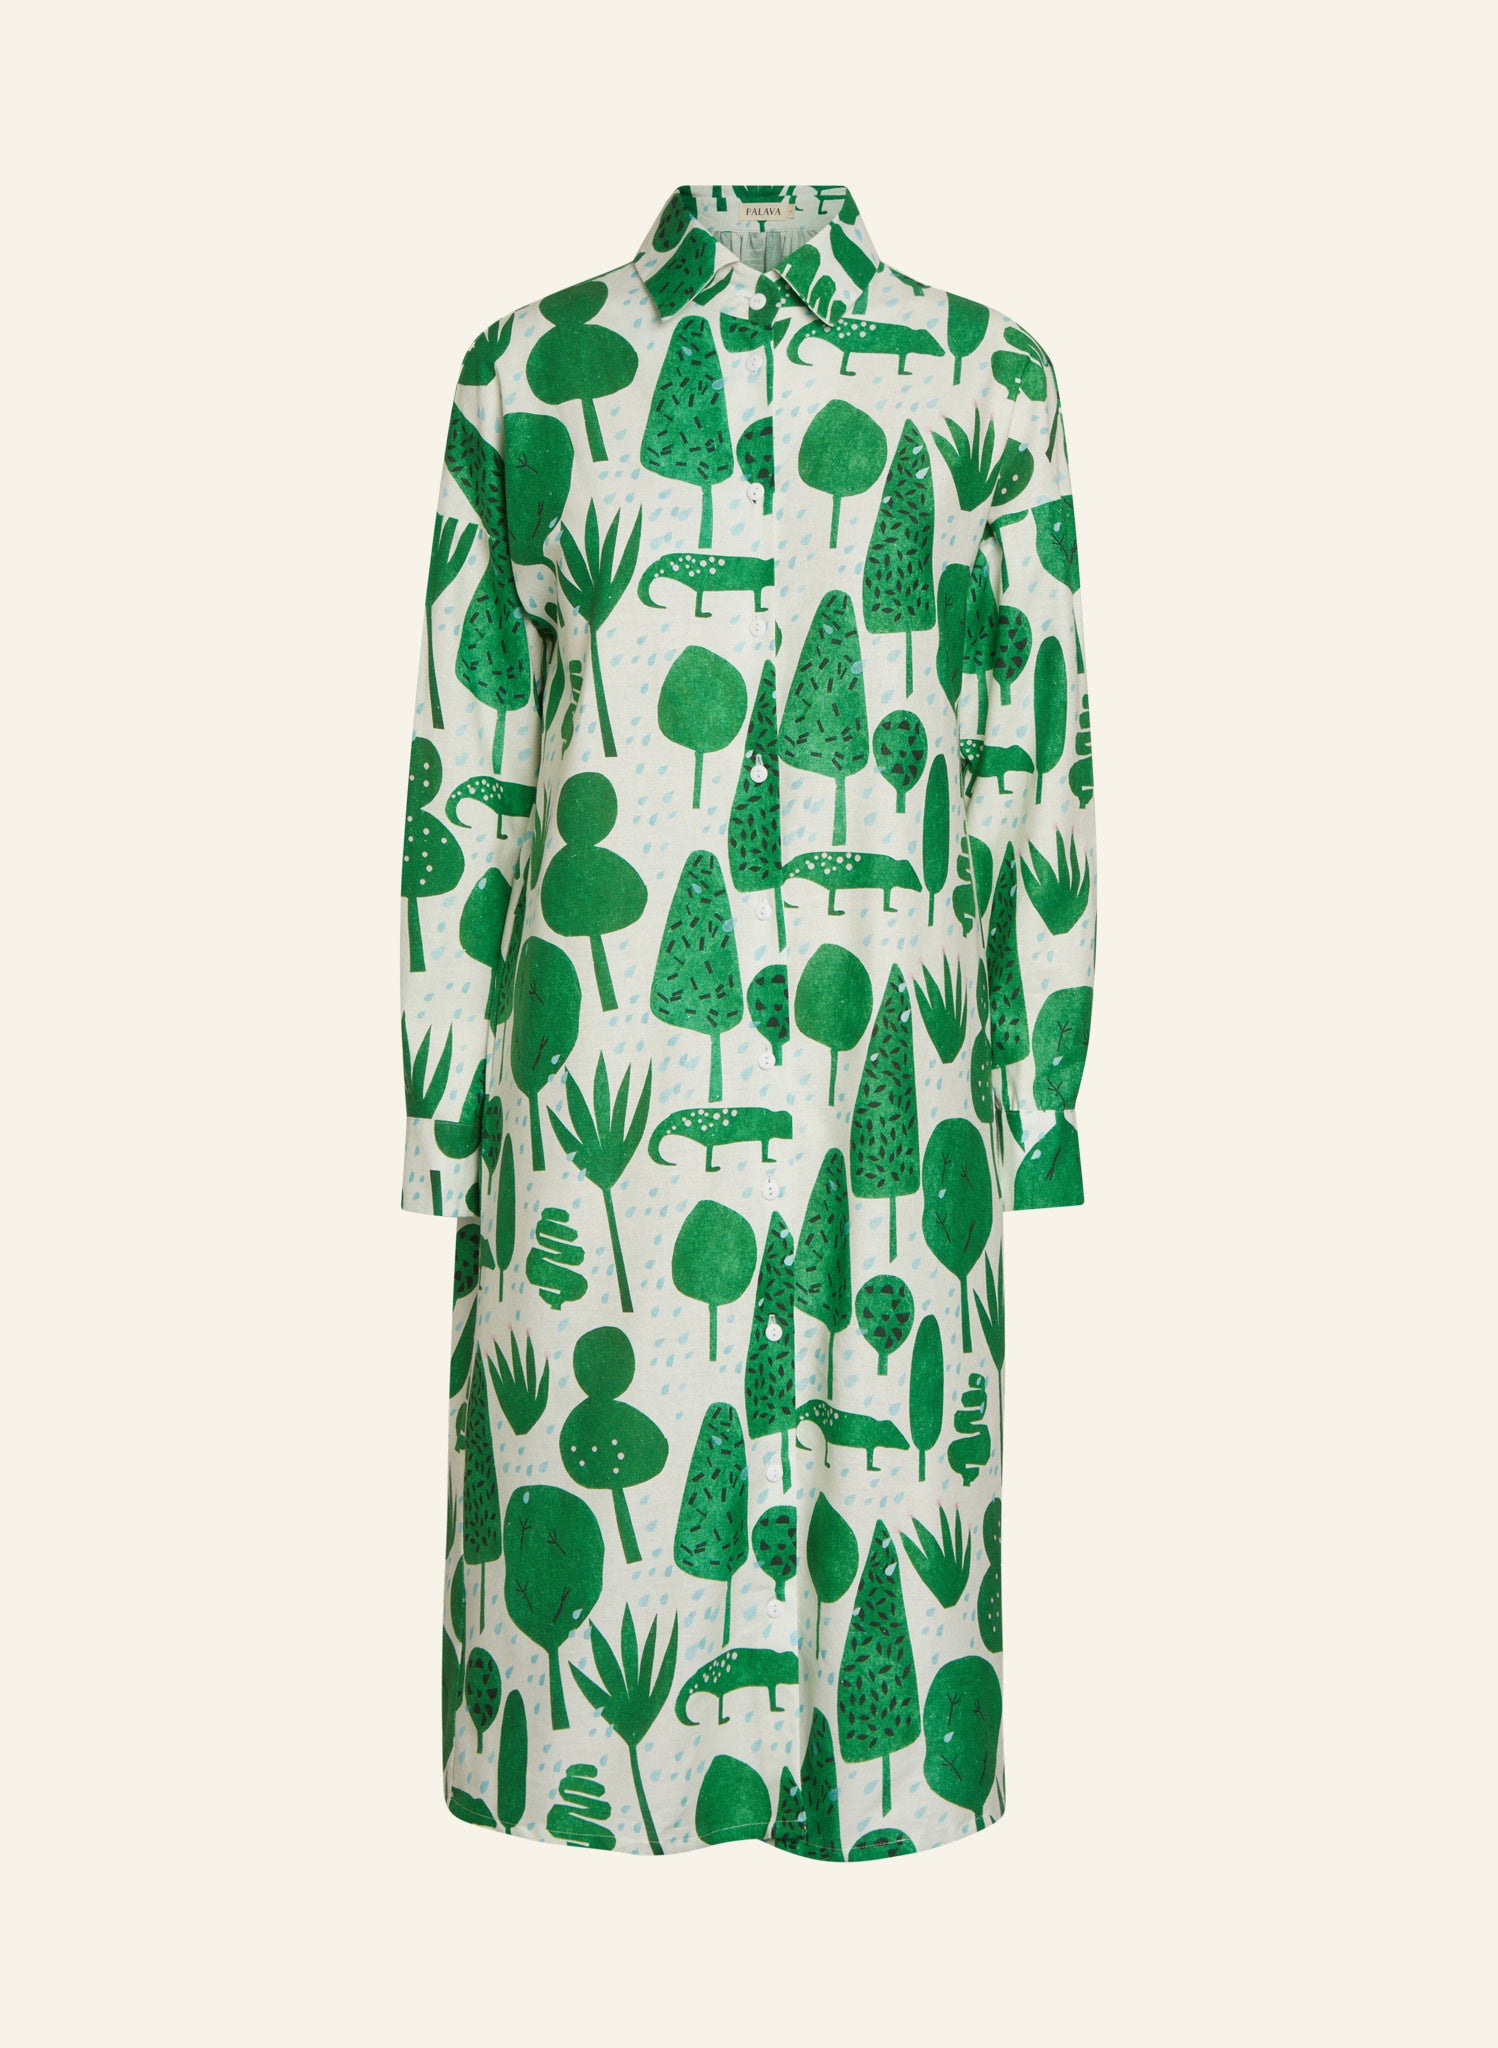 Izzy - Ivory Topiary Dress